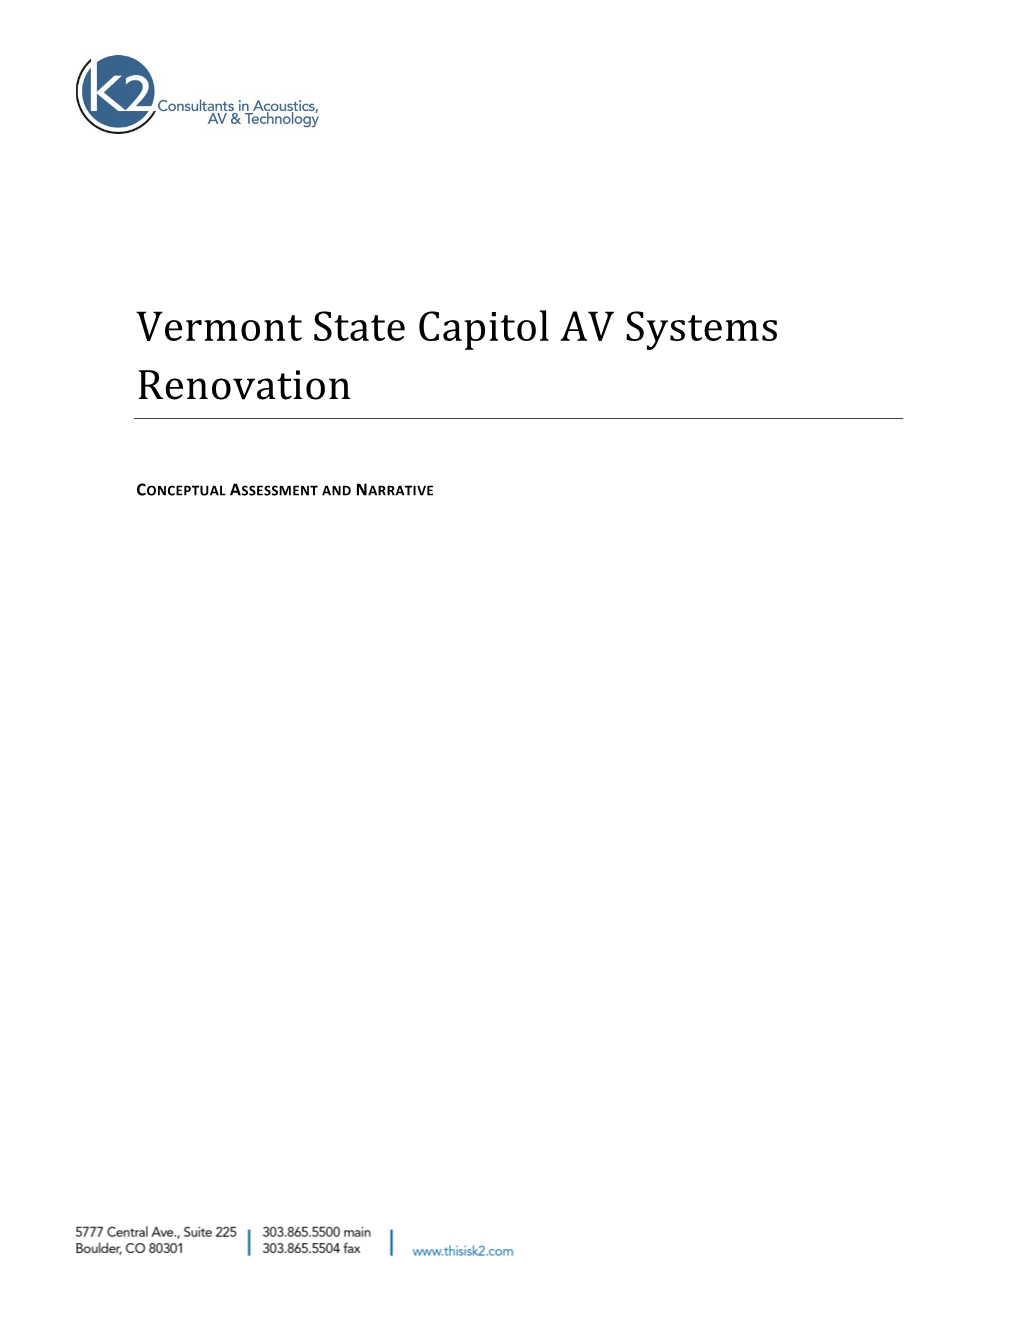 Vermont State Capitol AV Systems Renovation